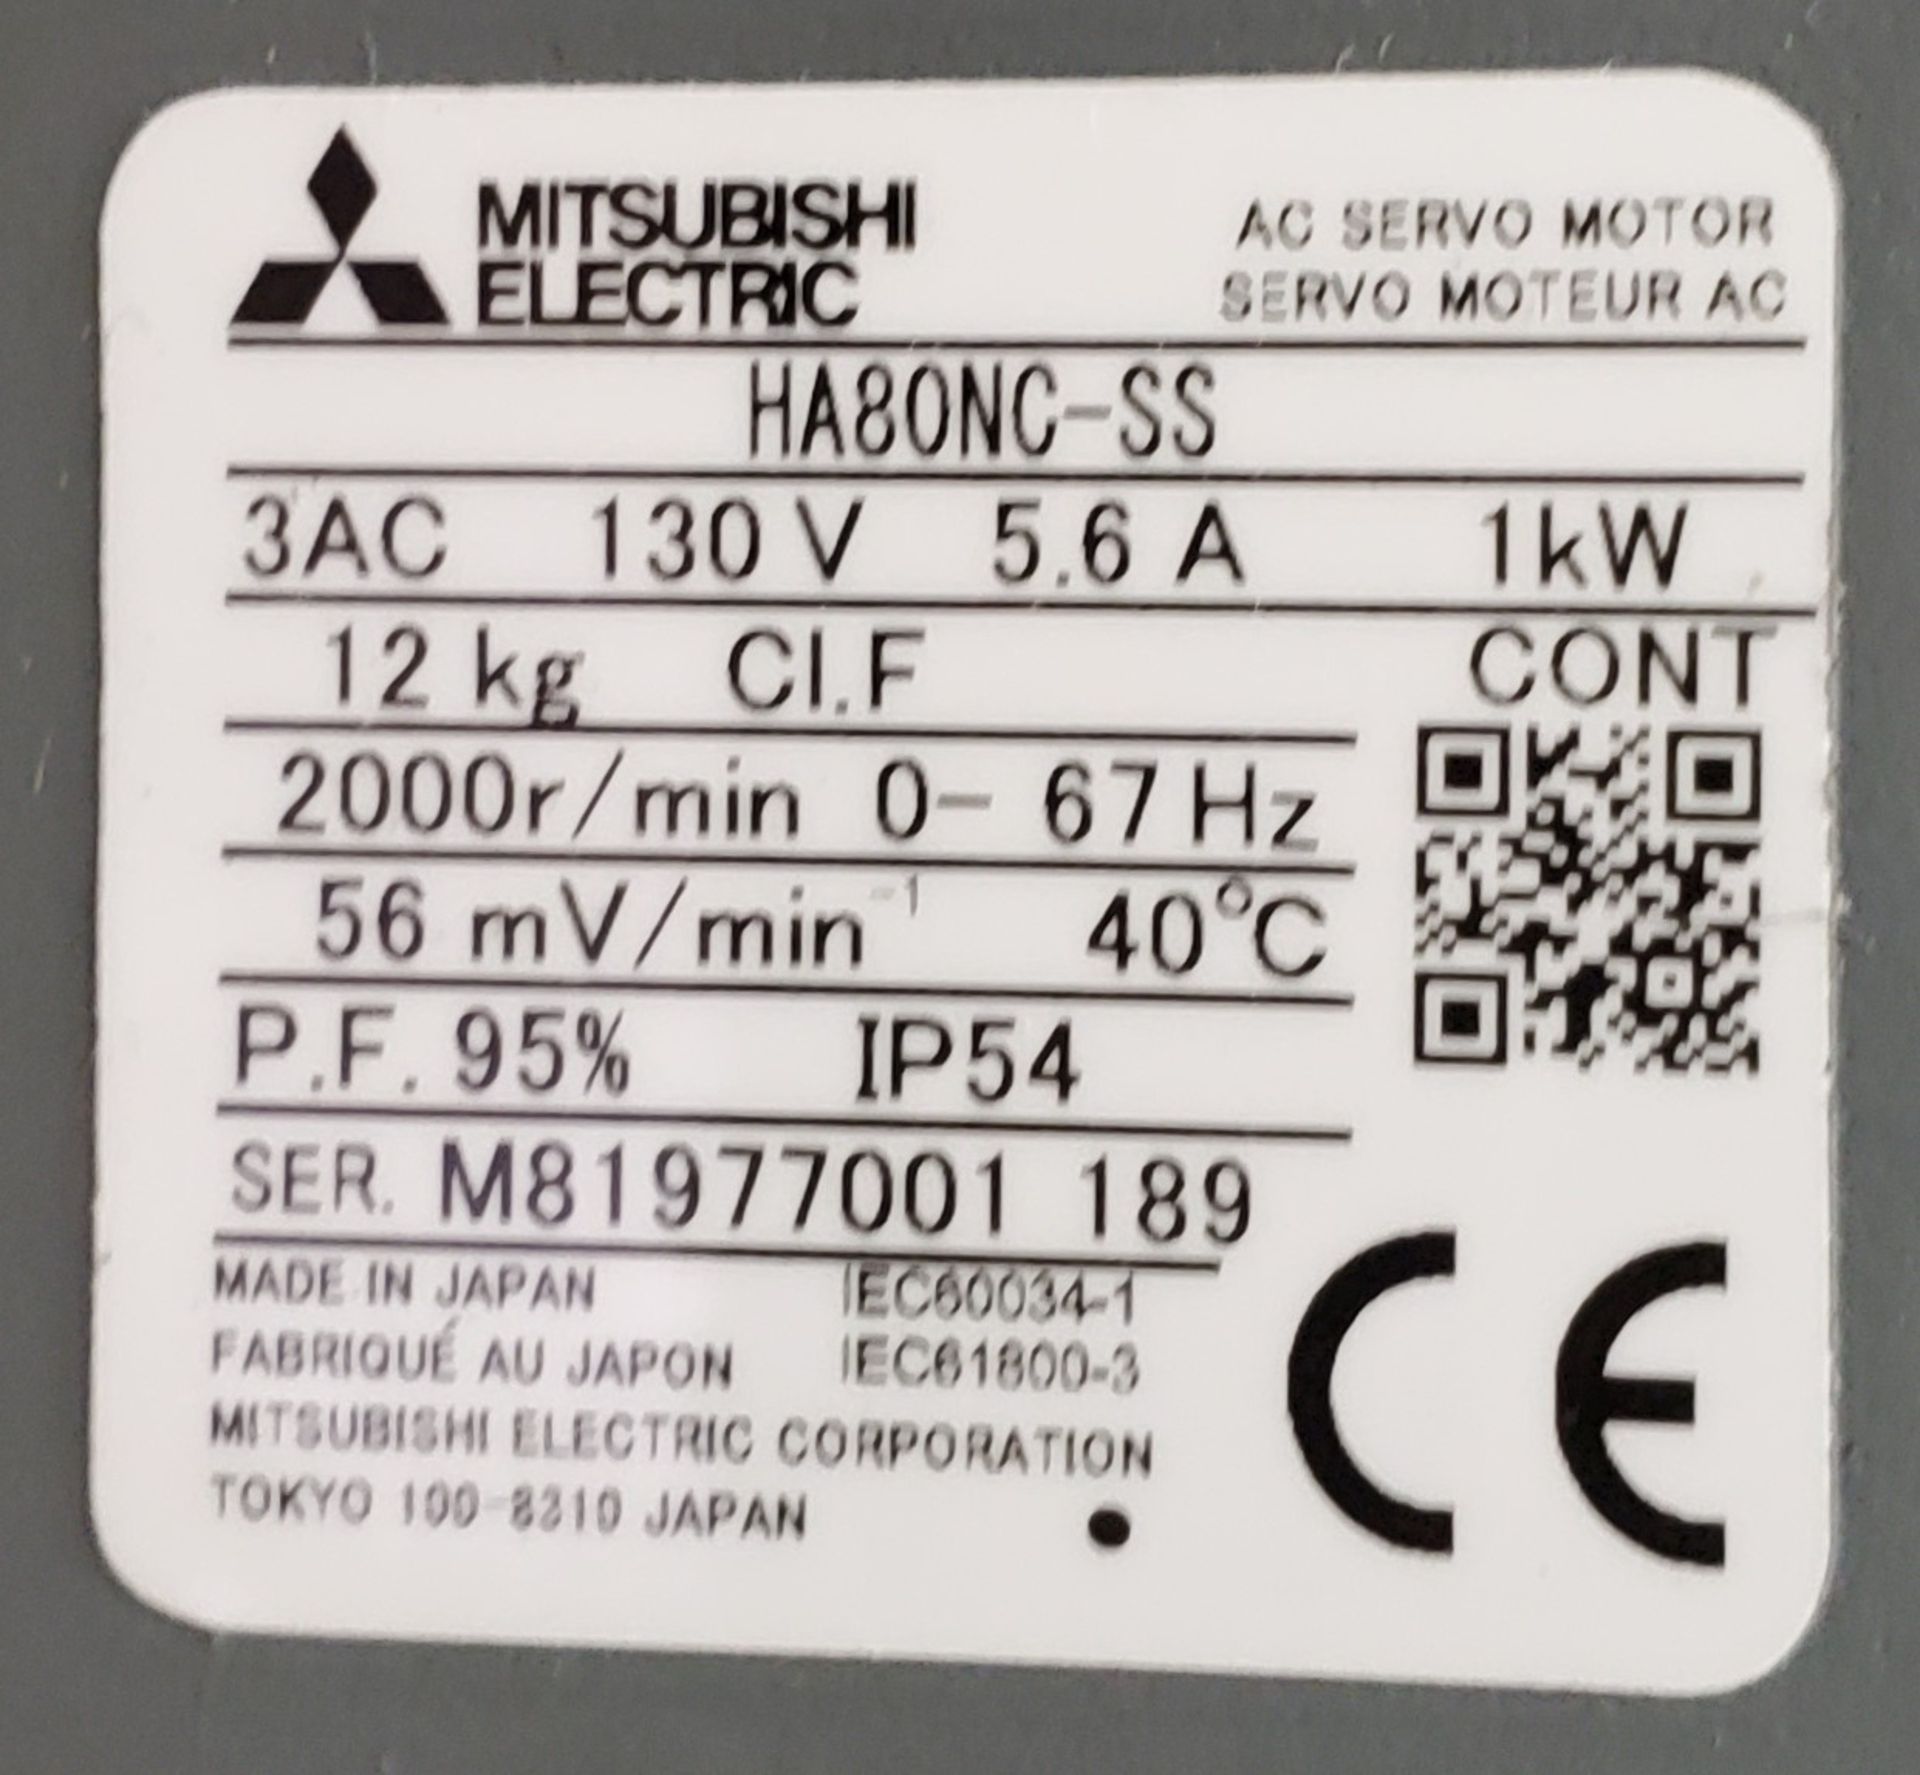 Mitsubishi #HA80NC-SS AC Servo Motor - Image 2 of 2